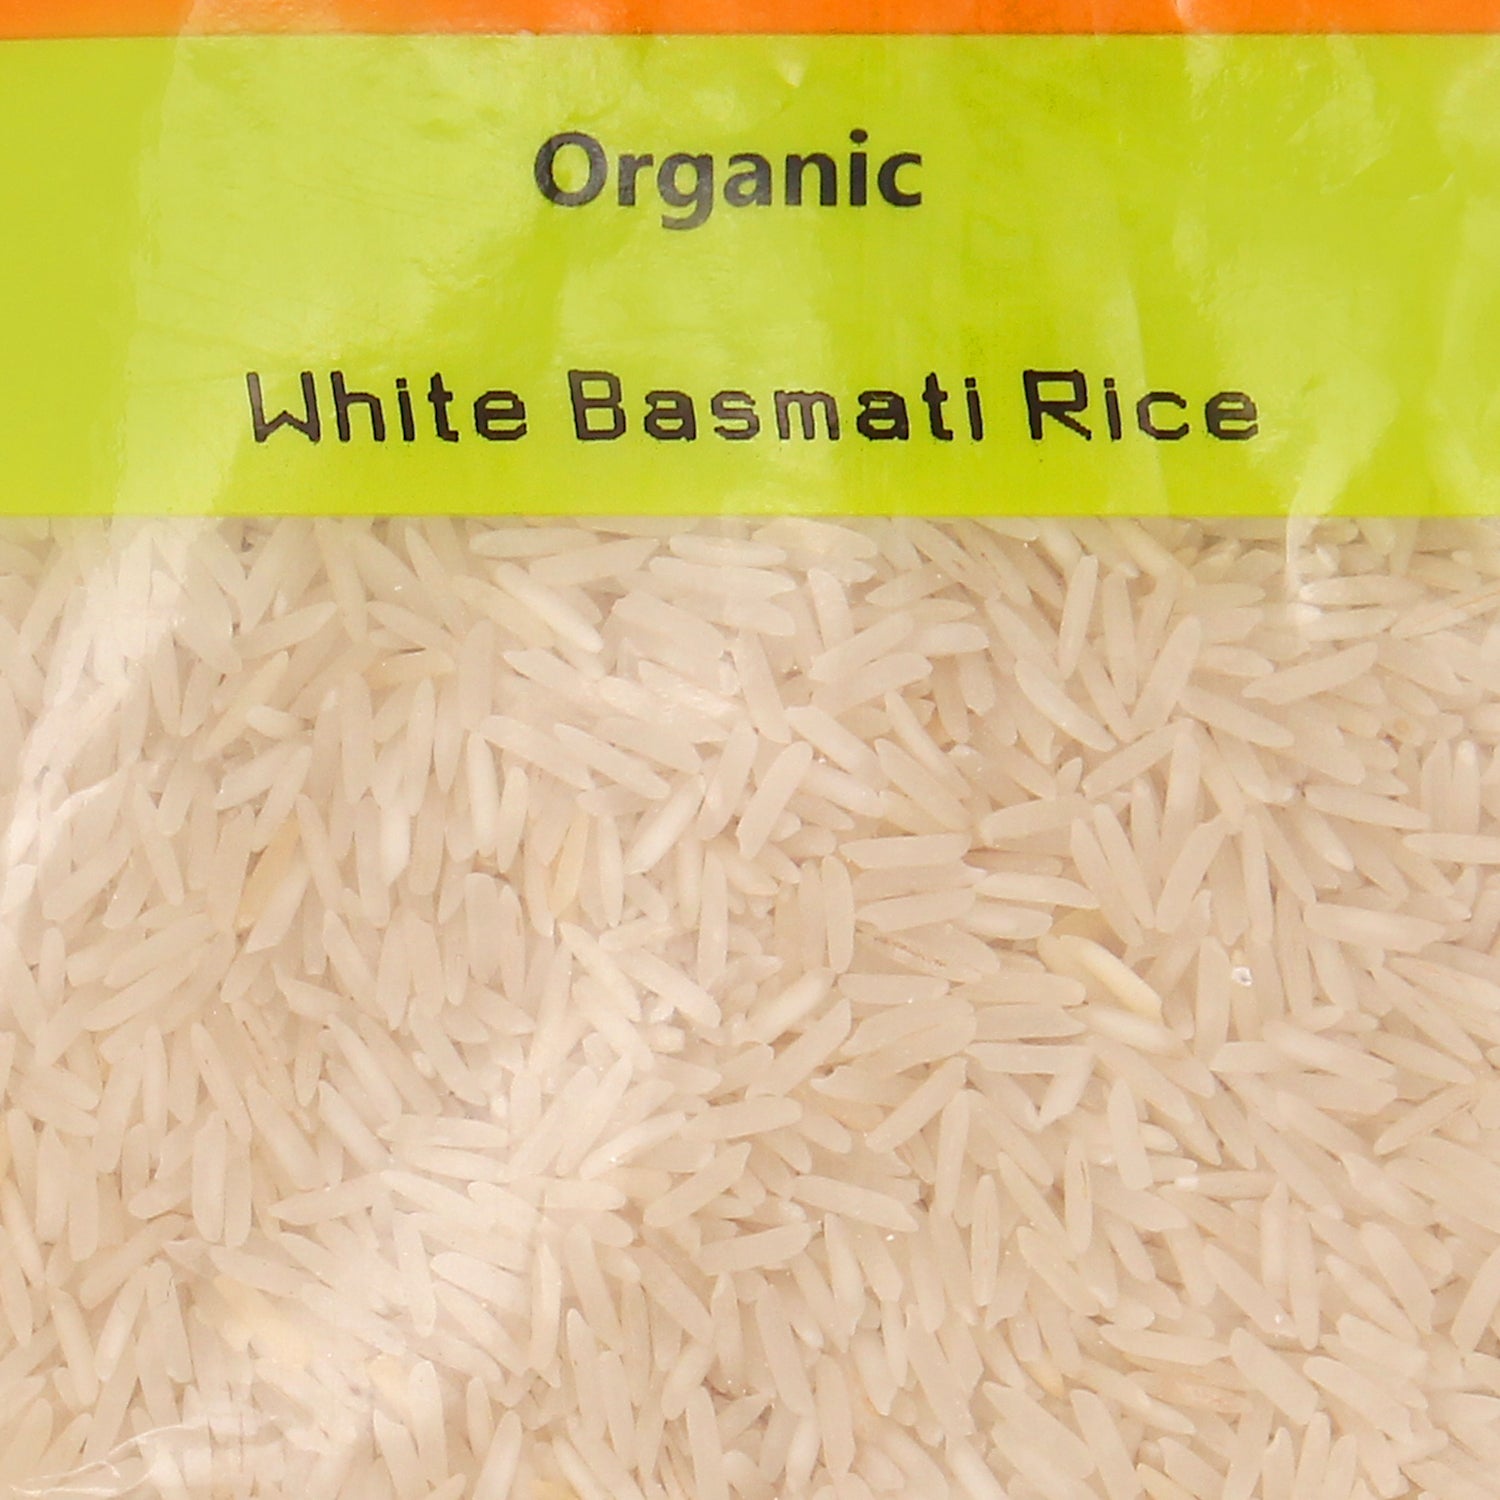 Sampurn Organic basmati white rice 500 g combo pack for daily use basamati raice best quality chawal extra long grain for biryani good taste and healthy nutrition ogranic, Organic White Basmati Rice,Rice , Basmati